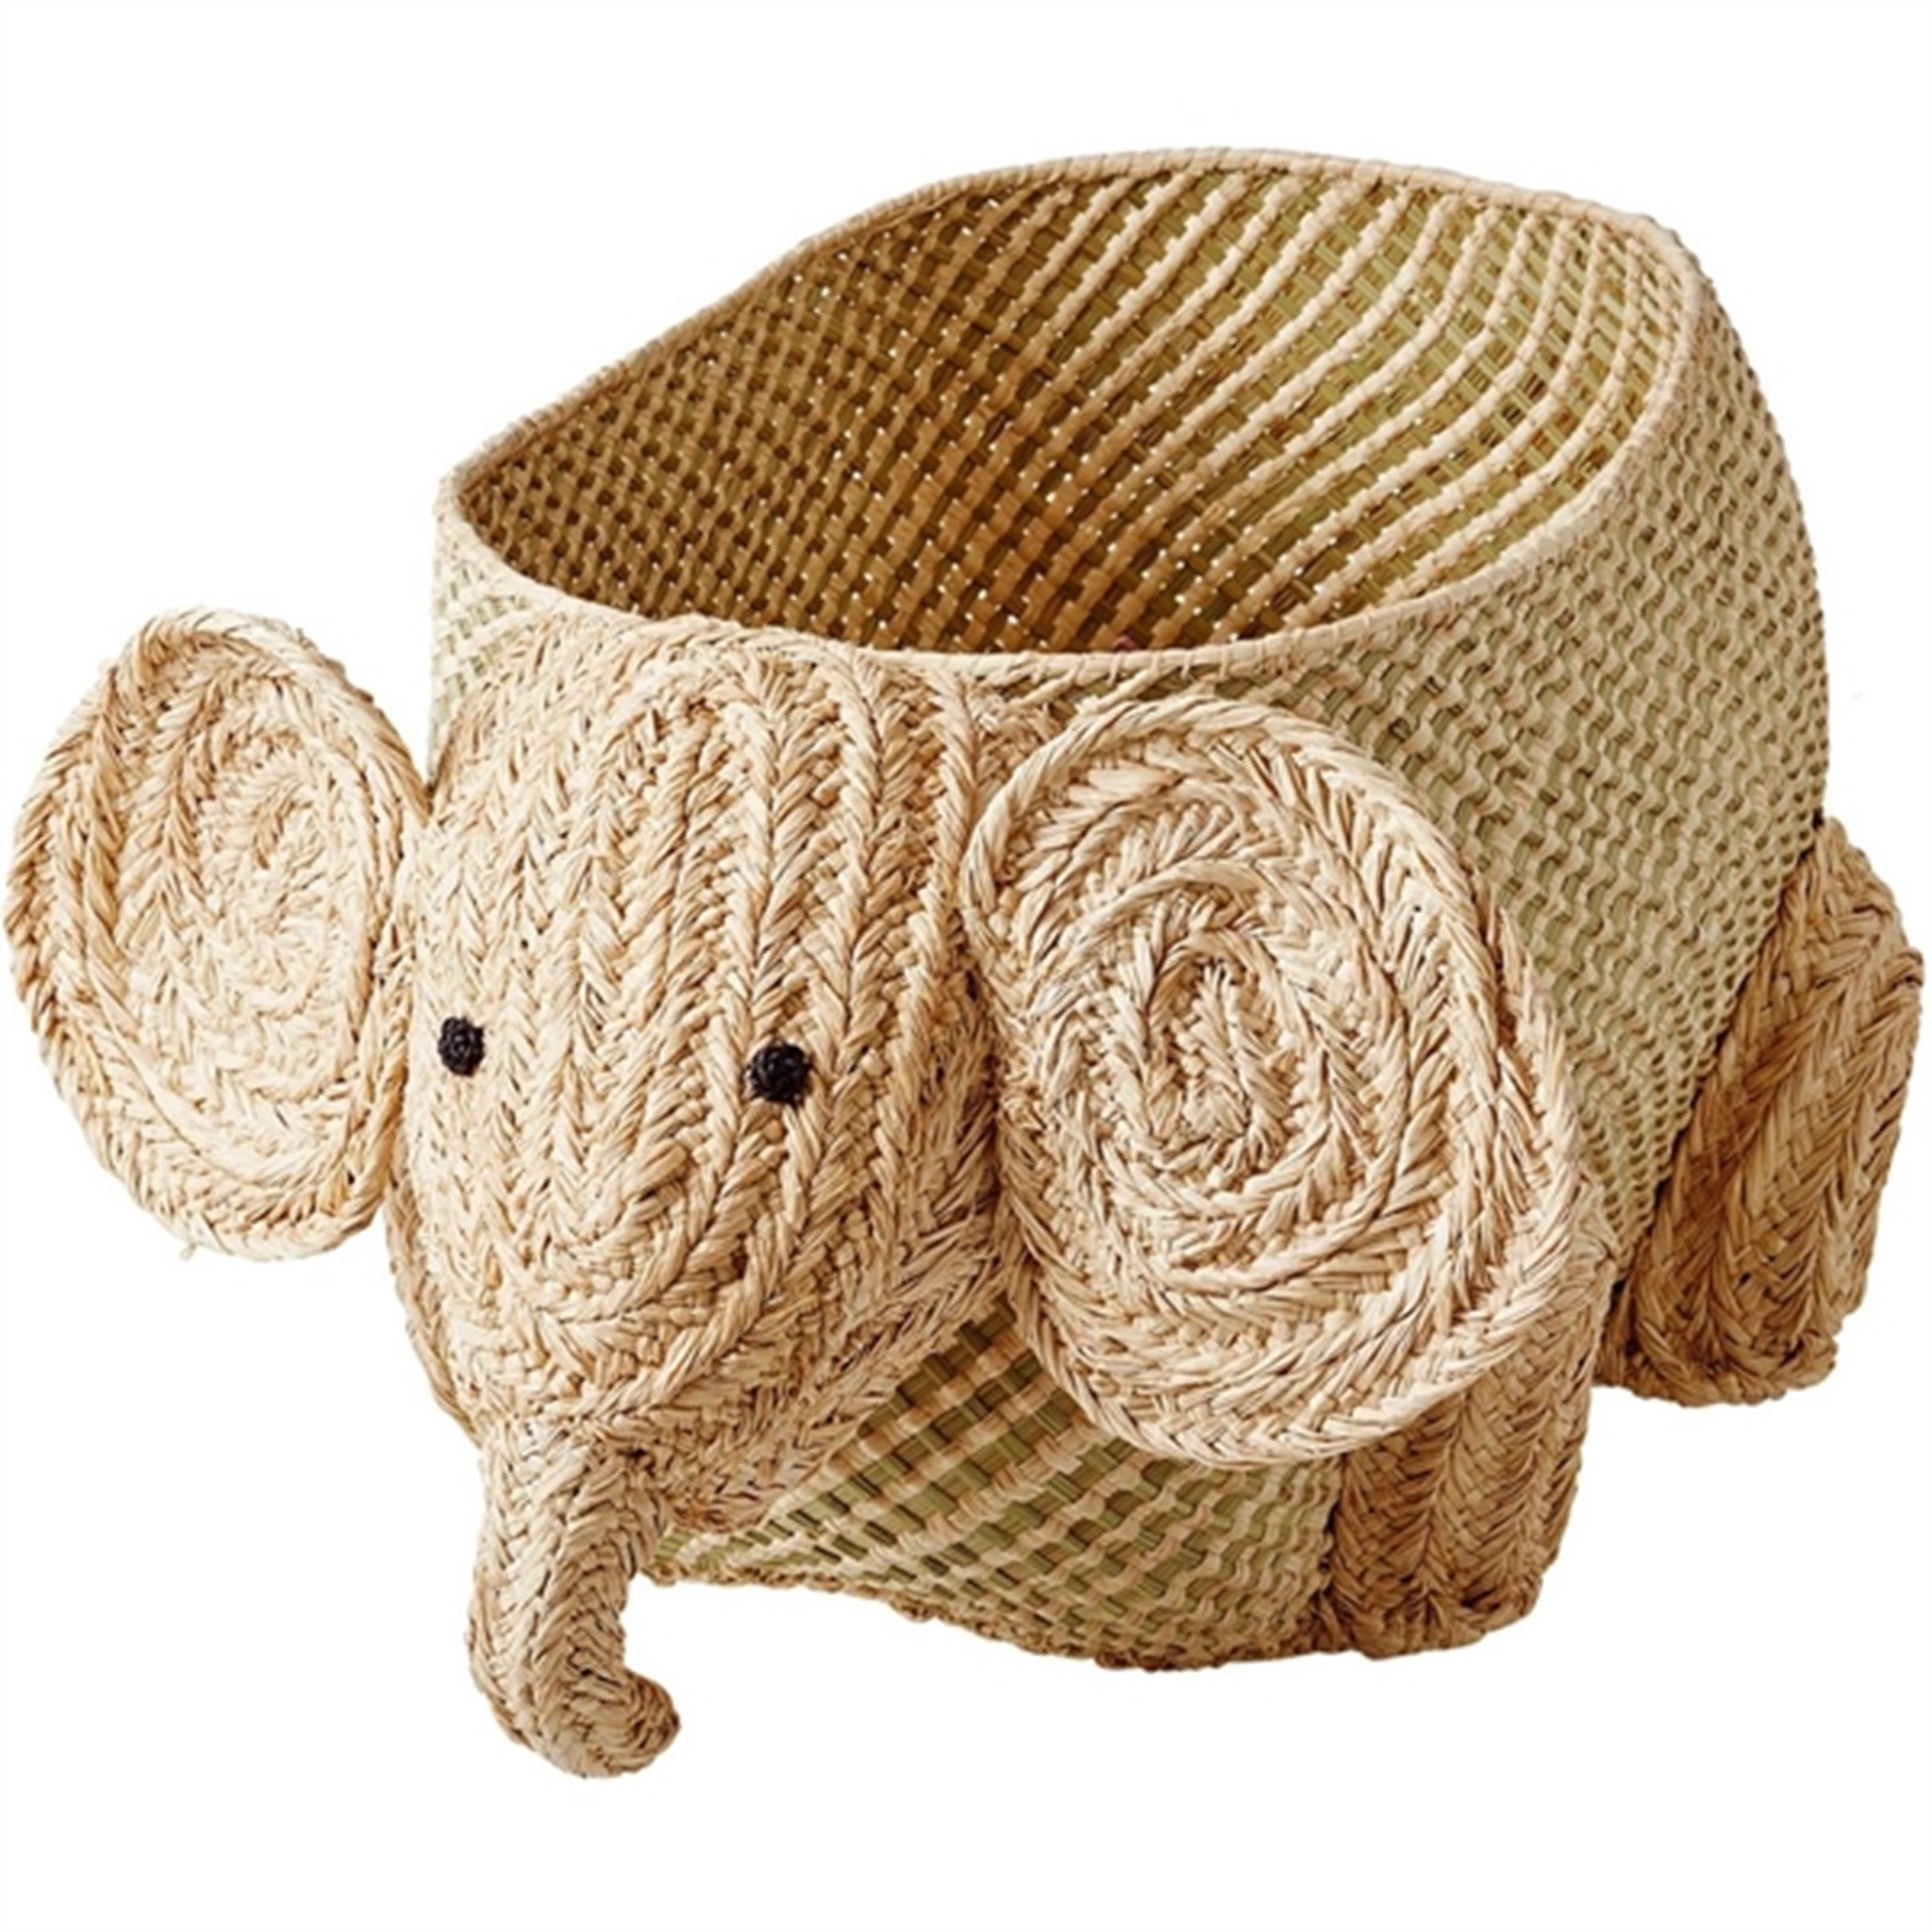 RICE Elephant Small Sea Grass Storage Basket